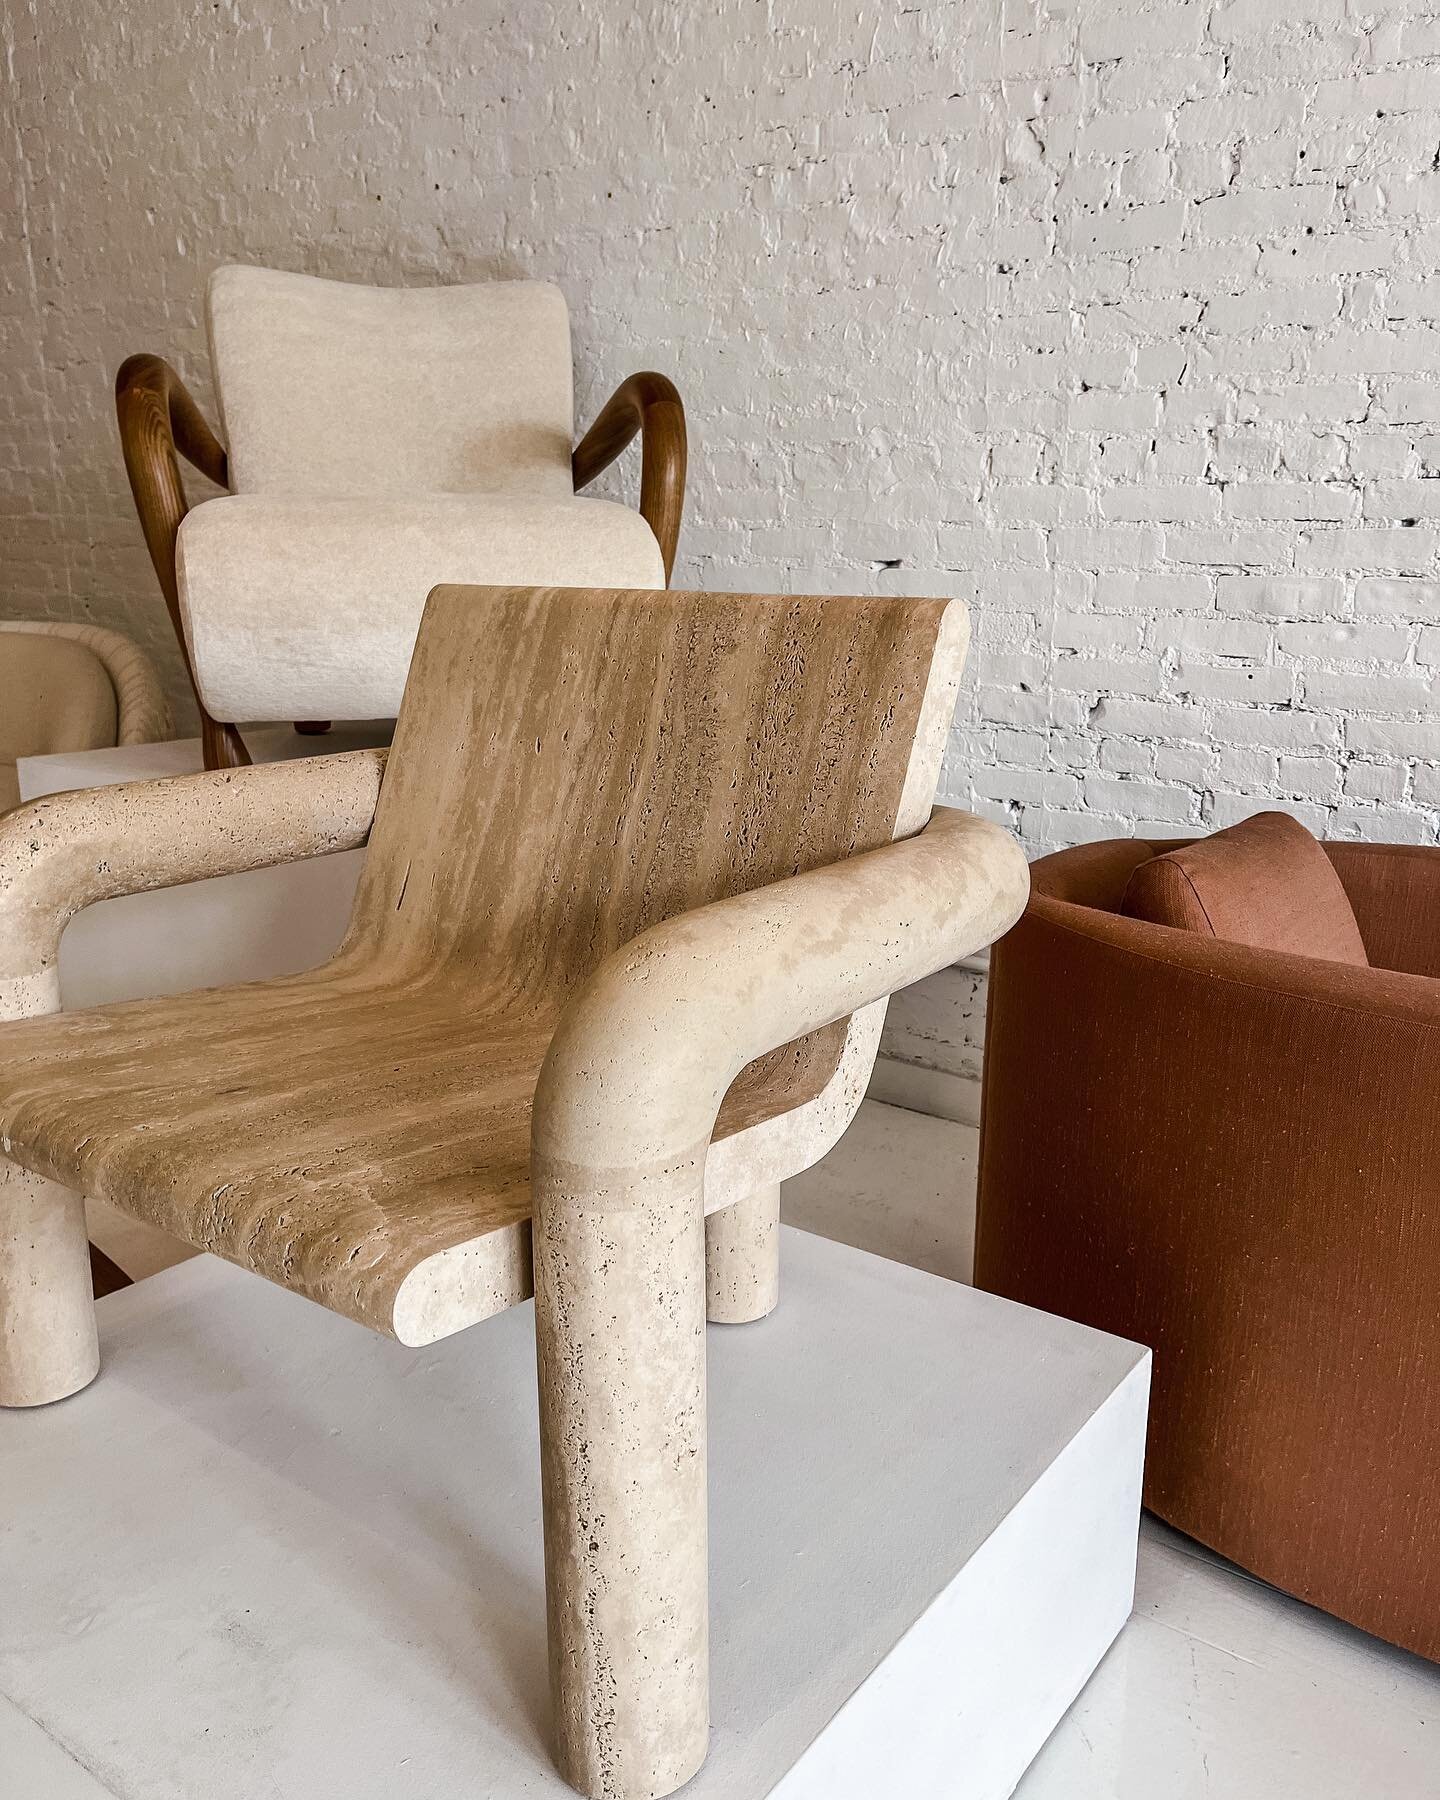 showroom visits in NYC - love these chairs 🪑 
.
.
.
#interiordesign #design #interiors #renovation #ny #nyc #nycinteriors #nycinteriordesigner #newyorkinterior #showroomvisit #openstudio #interiorshowroom #furnituredesign #furniture #decor #vintagef